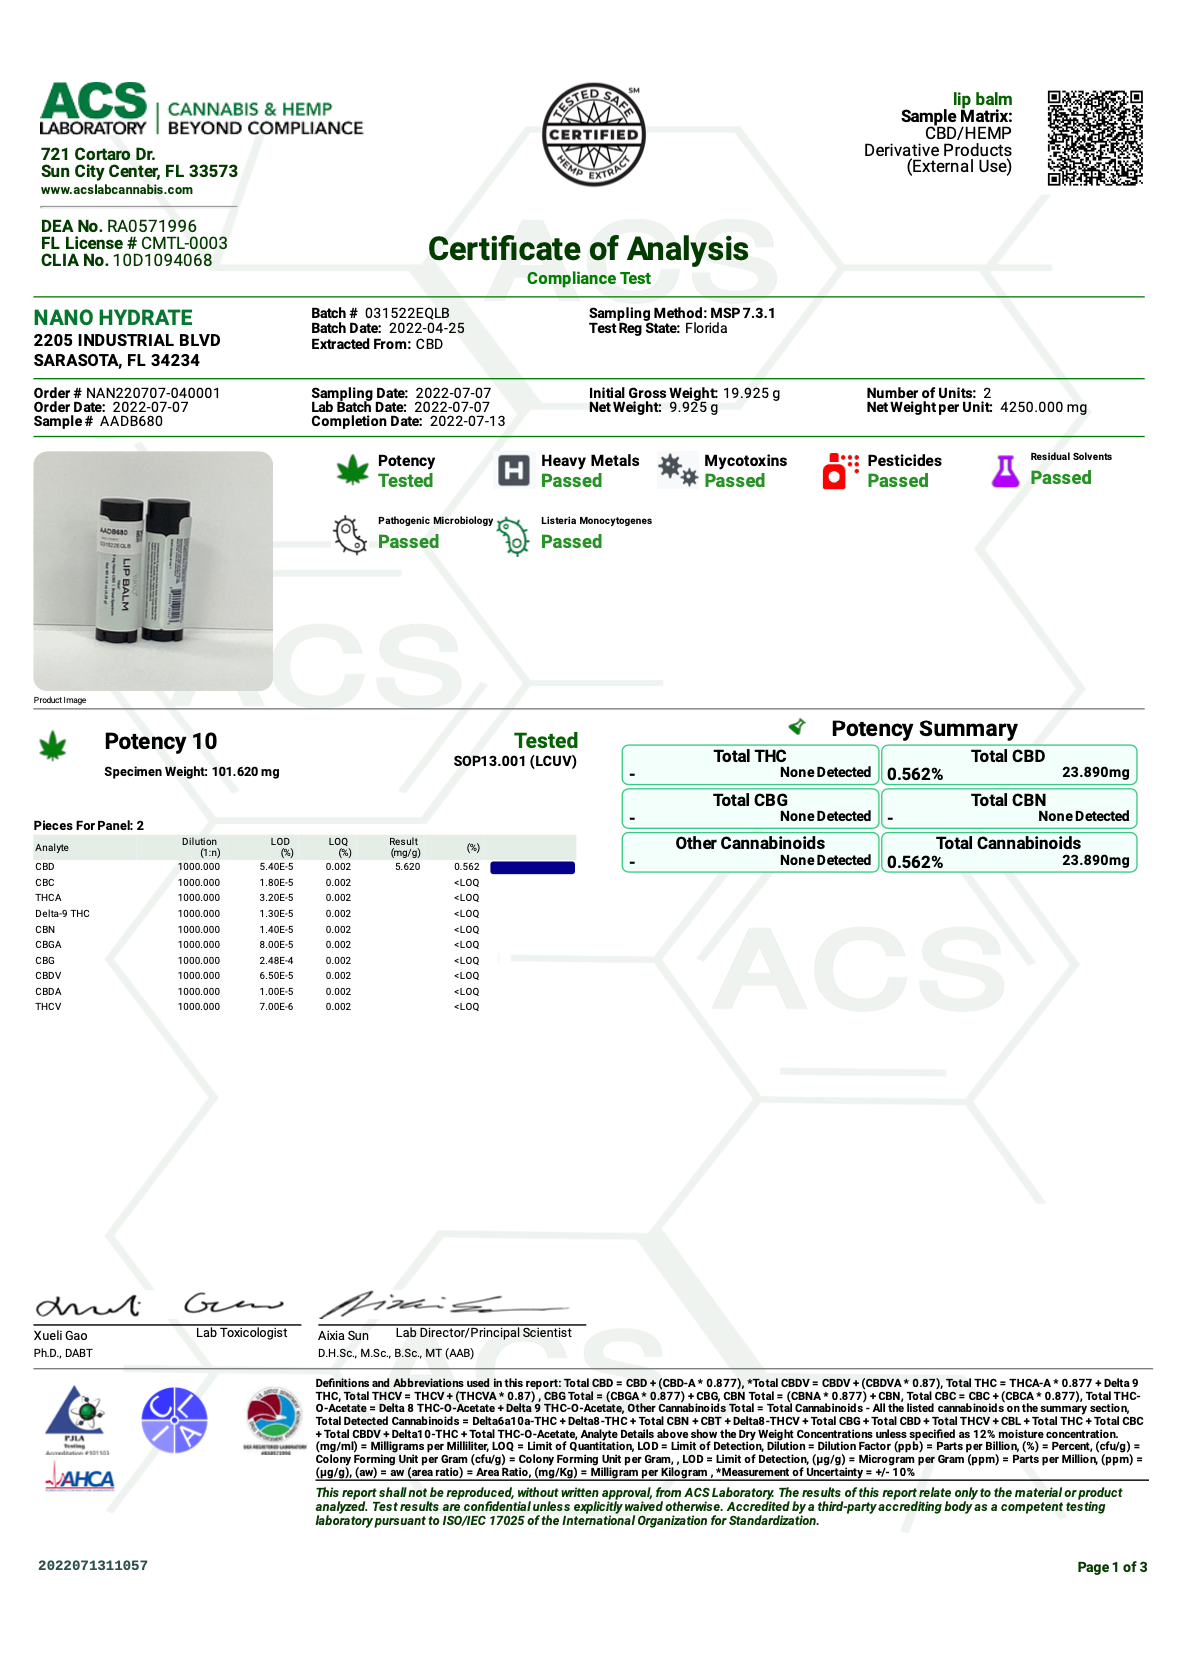 Certificate of Analysis for MRNG LLC Lip Balm THC free Hemp CBD Cosmetic Wellness Product